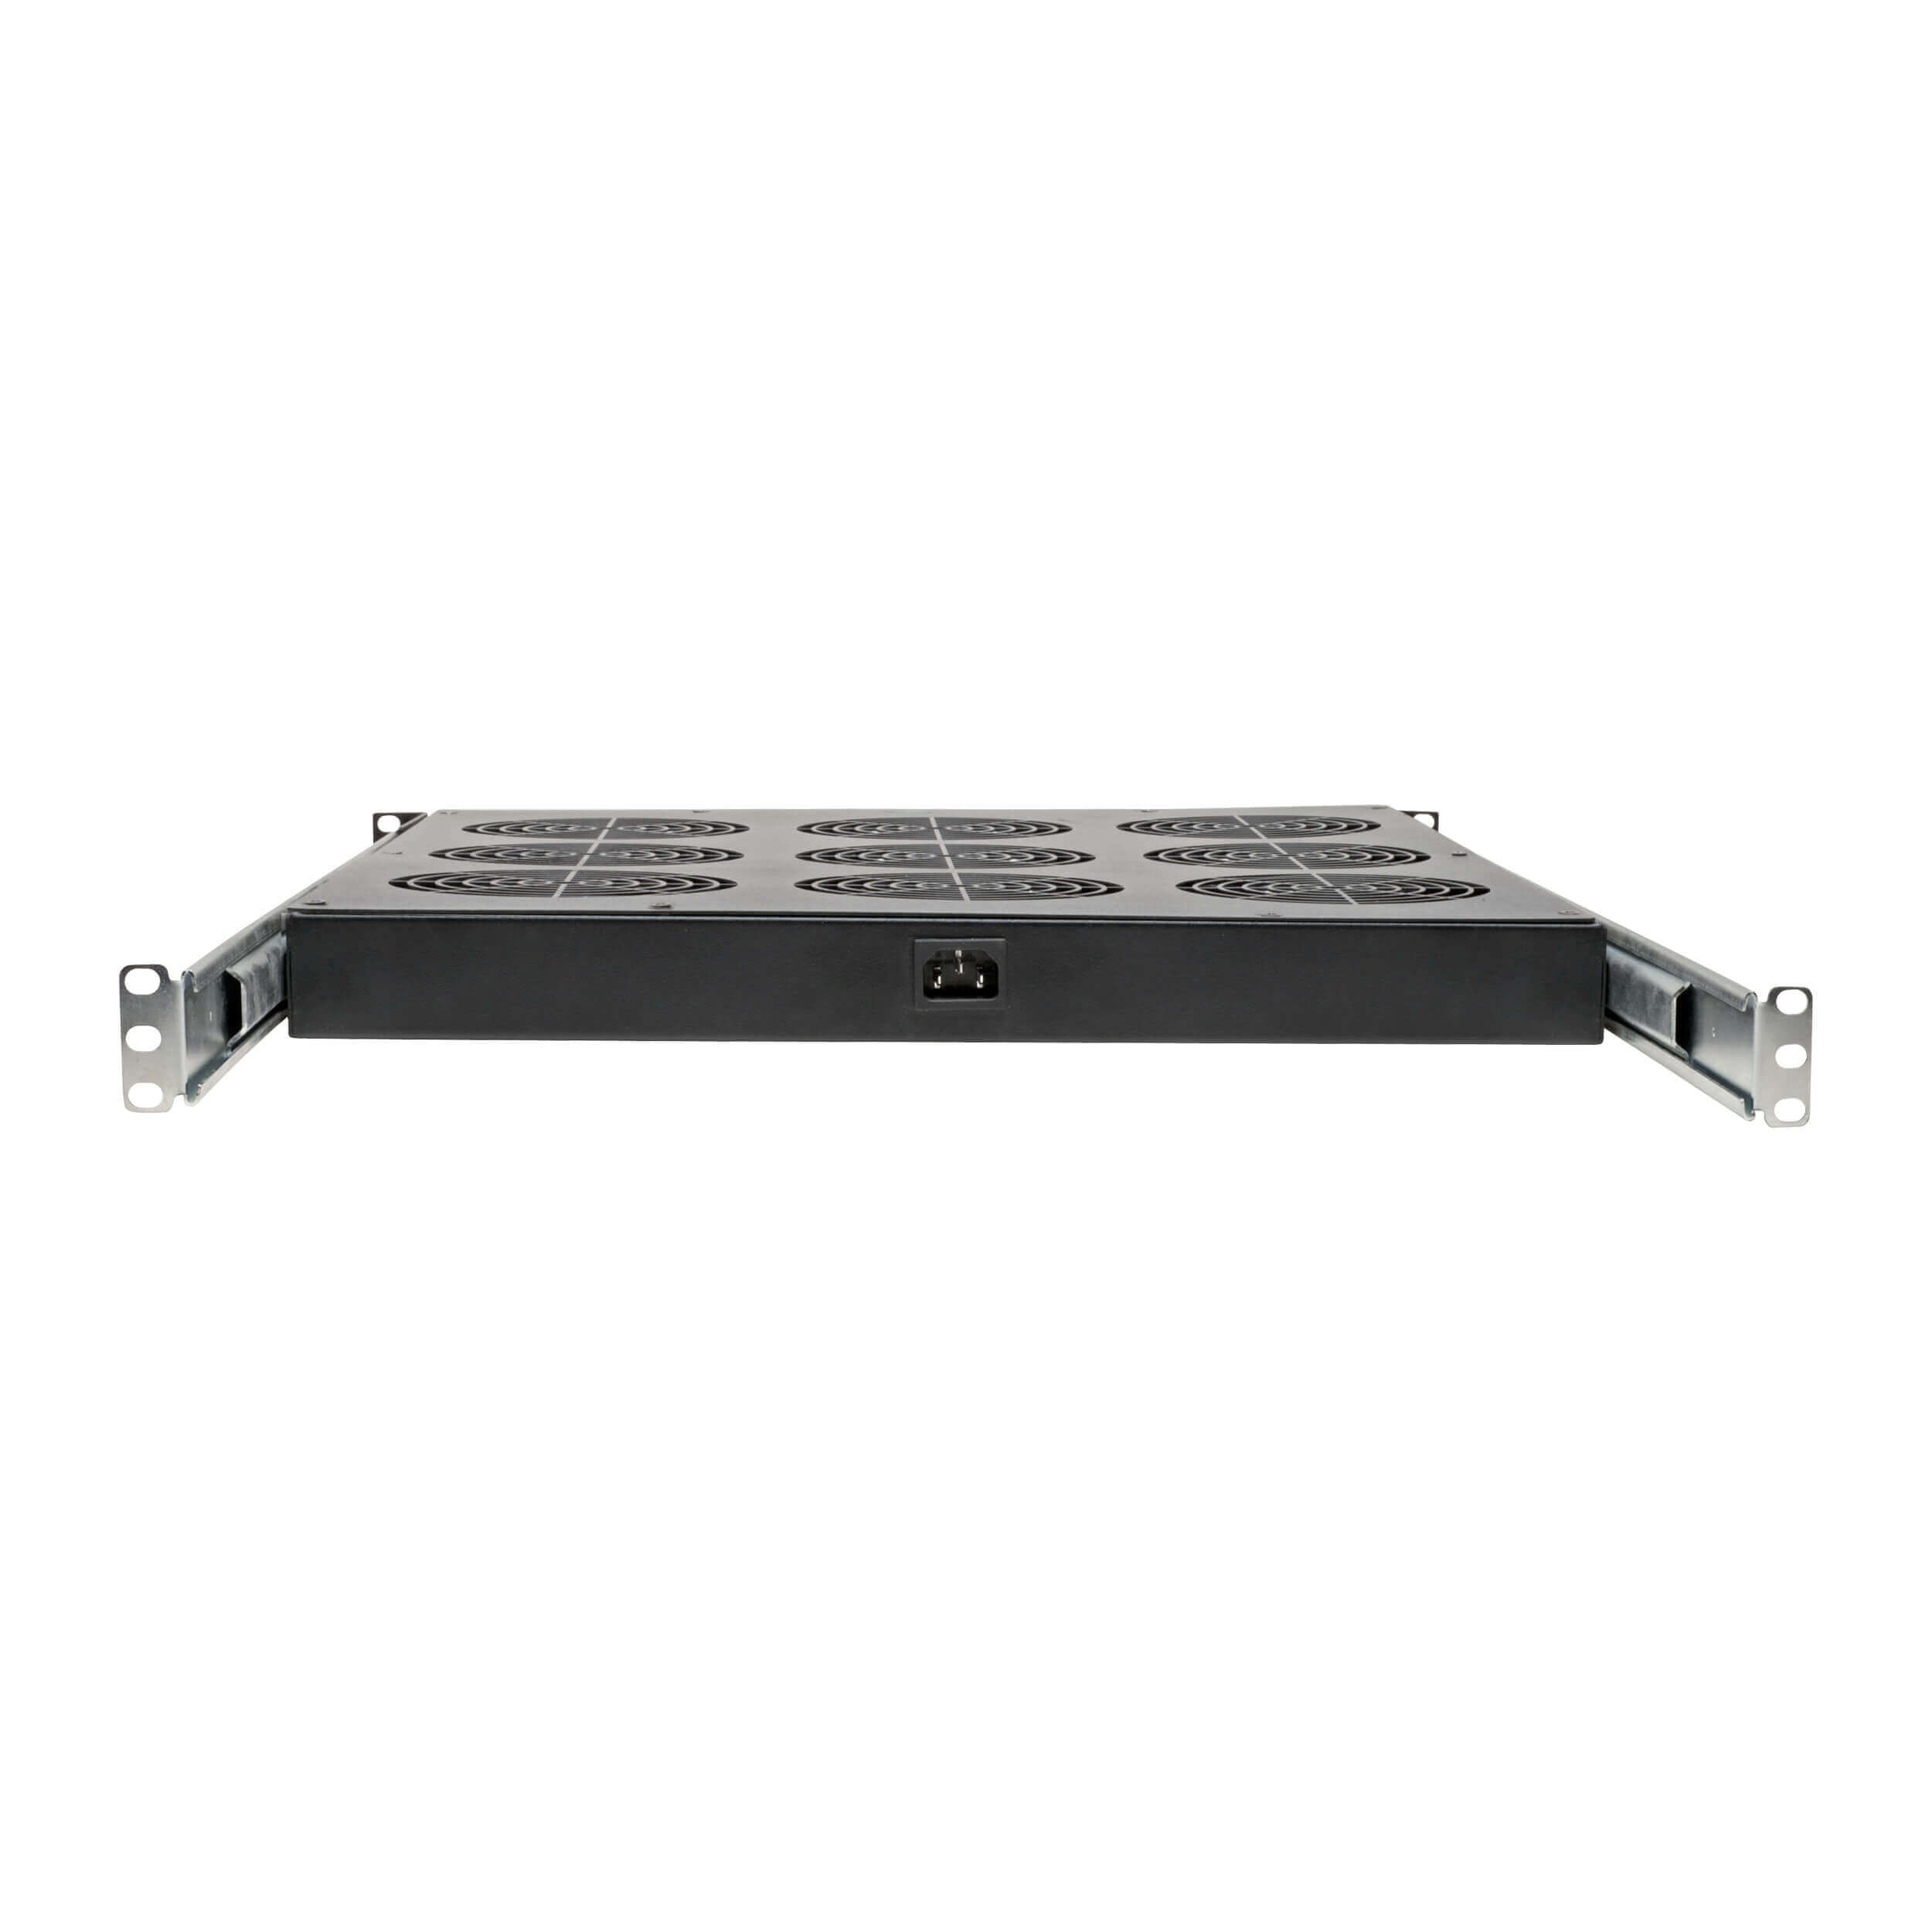 Fan Tray for 19-in. Server Racks, 120V, 1U, C-14 Plug, 864 CFM | Eaton